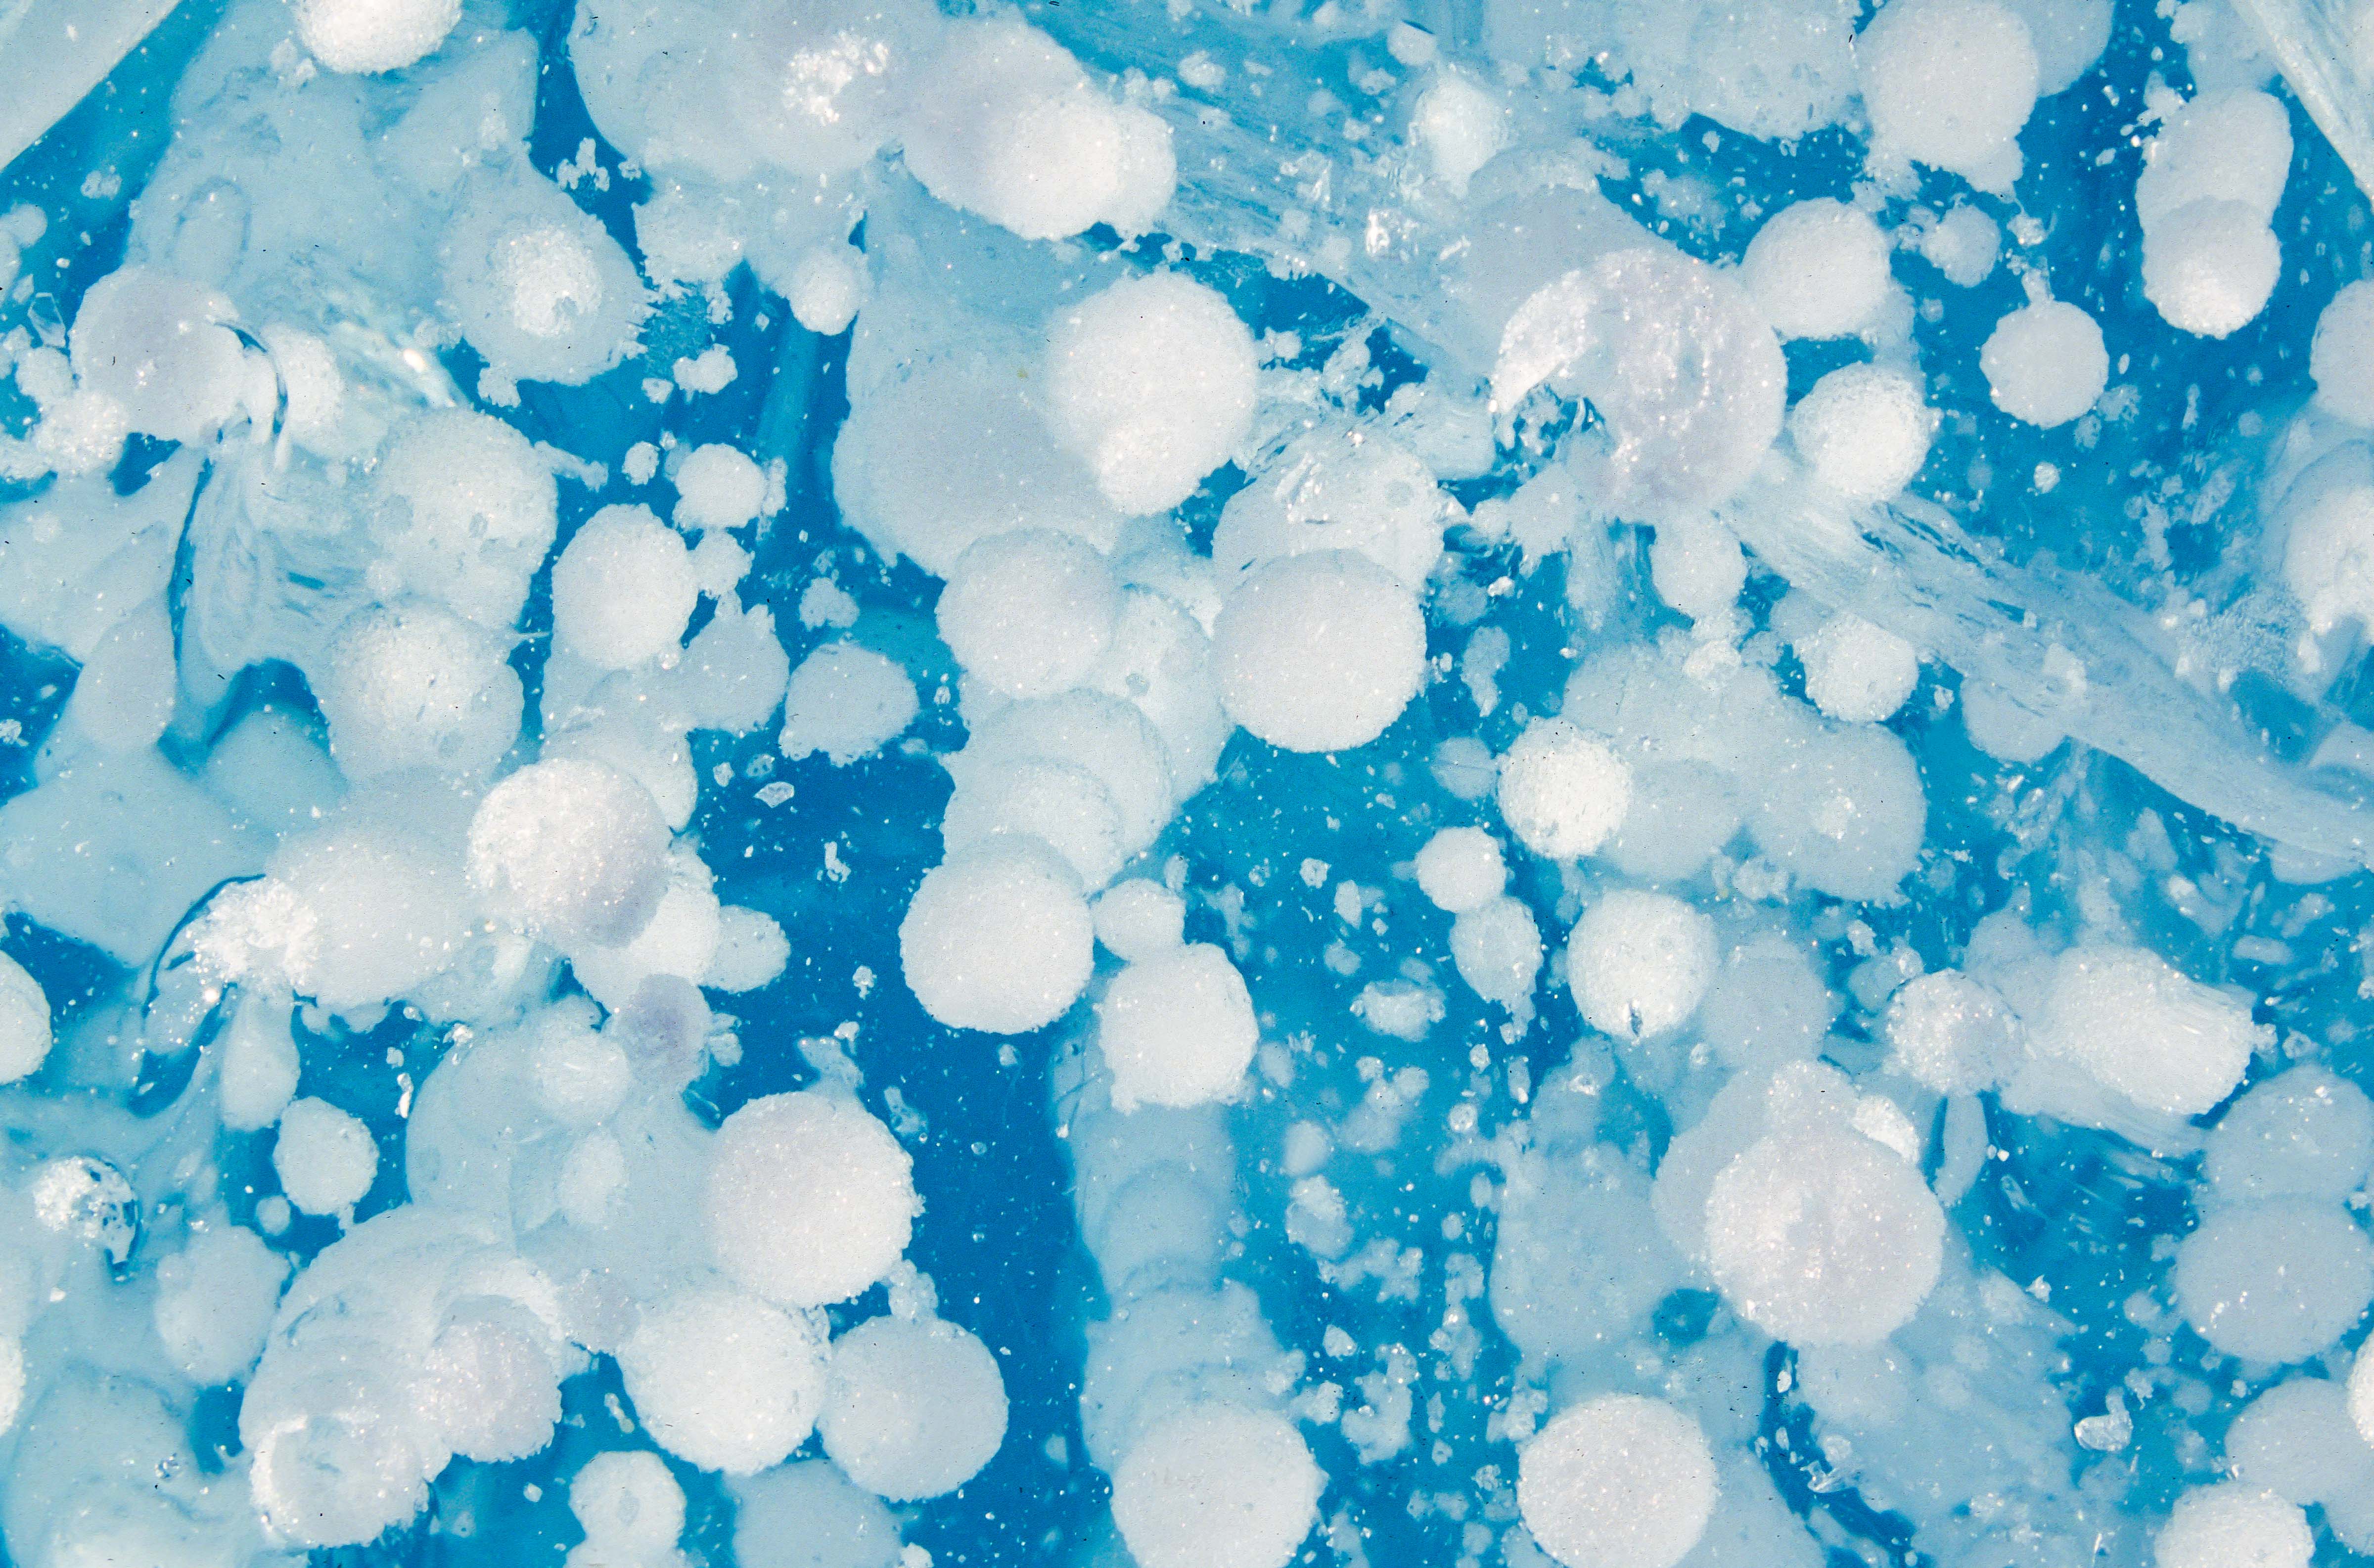 Antarctica, Ice Bubbles 1, 2001